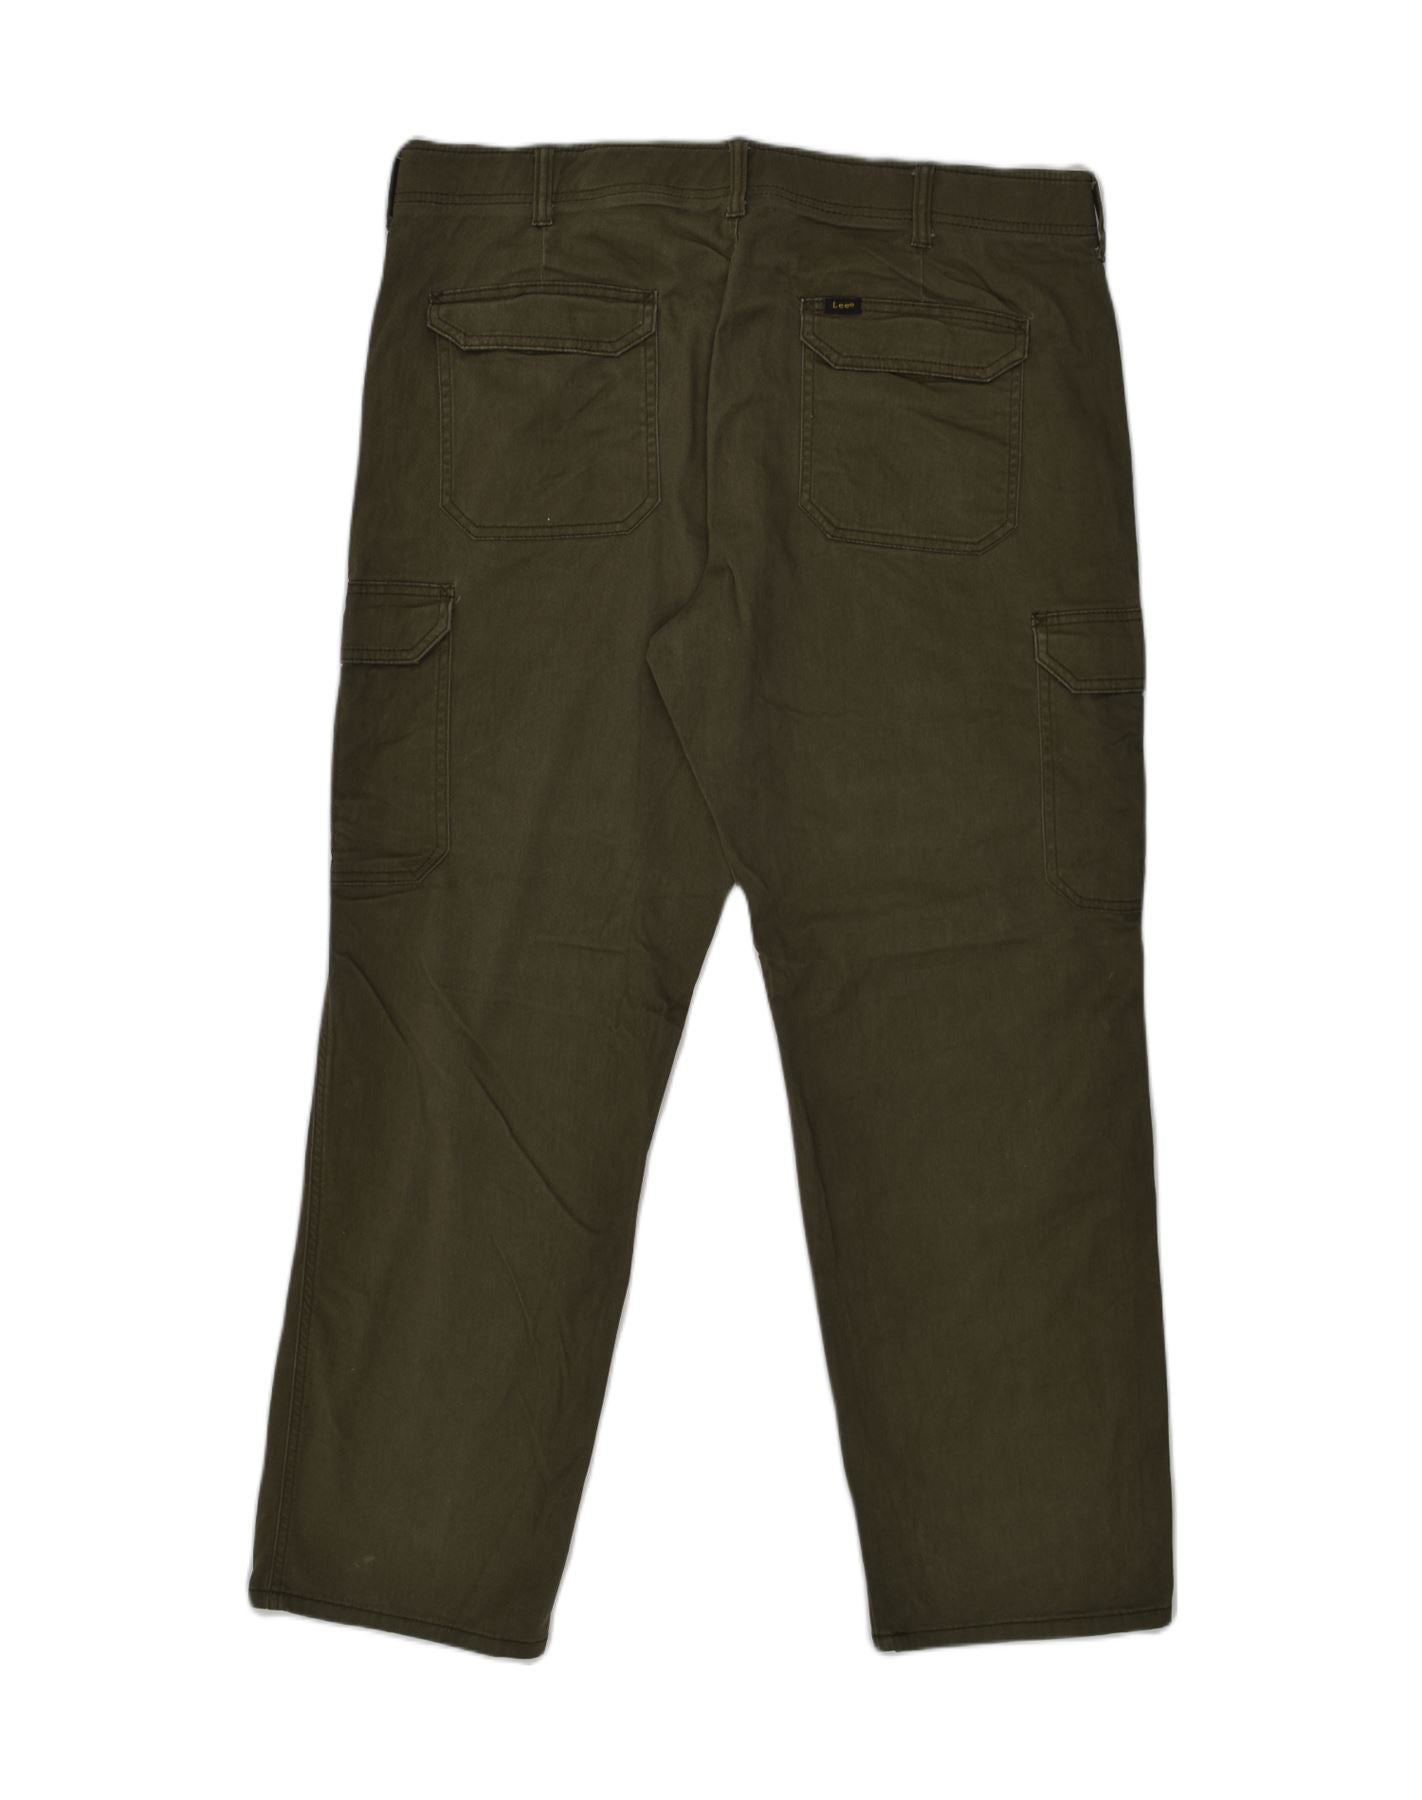 Buy Brown Track Pants for Men by LEE COOPER Online | Ajio.com